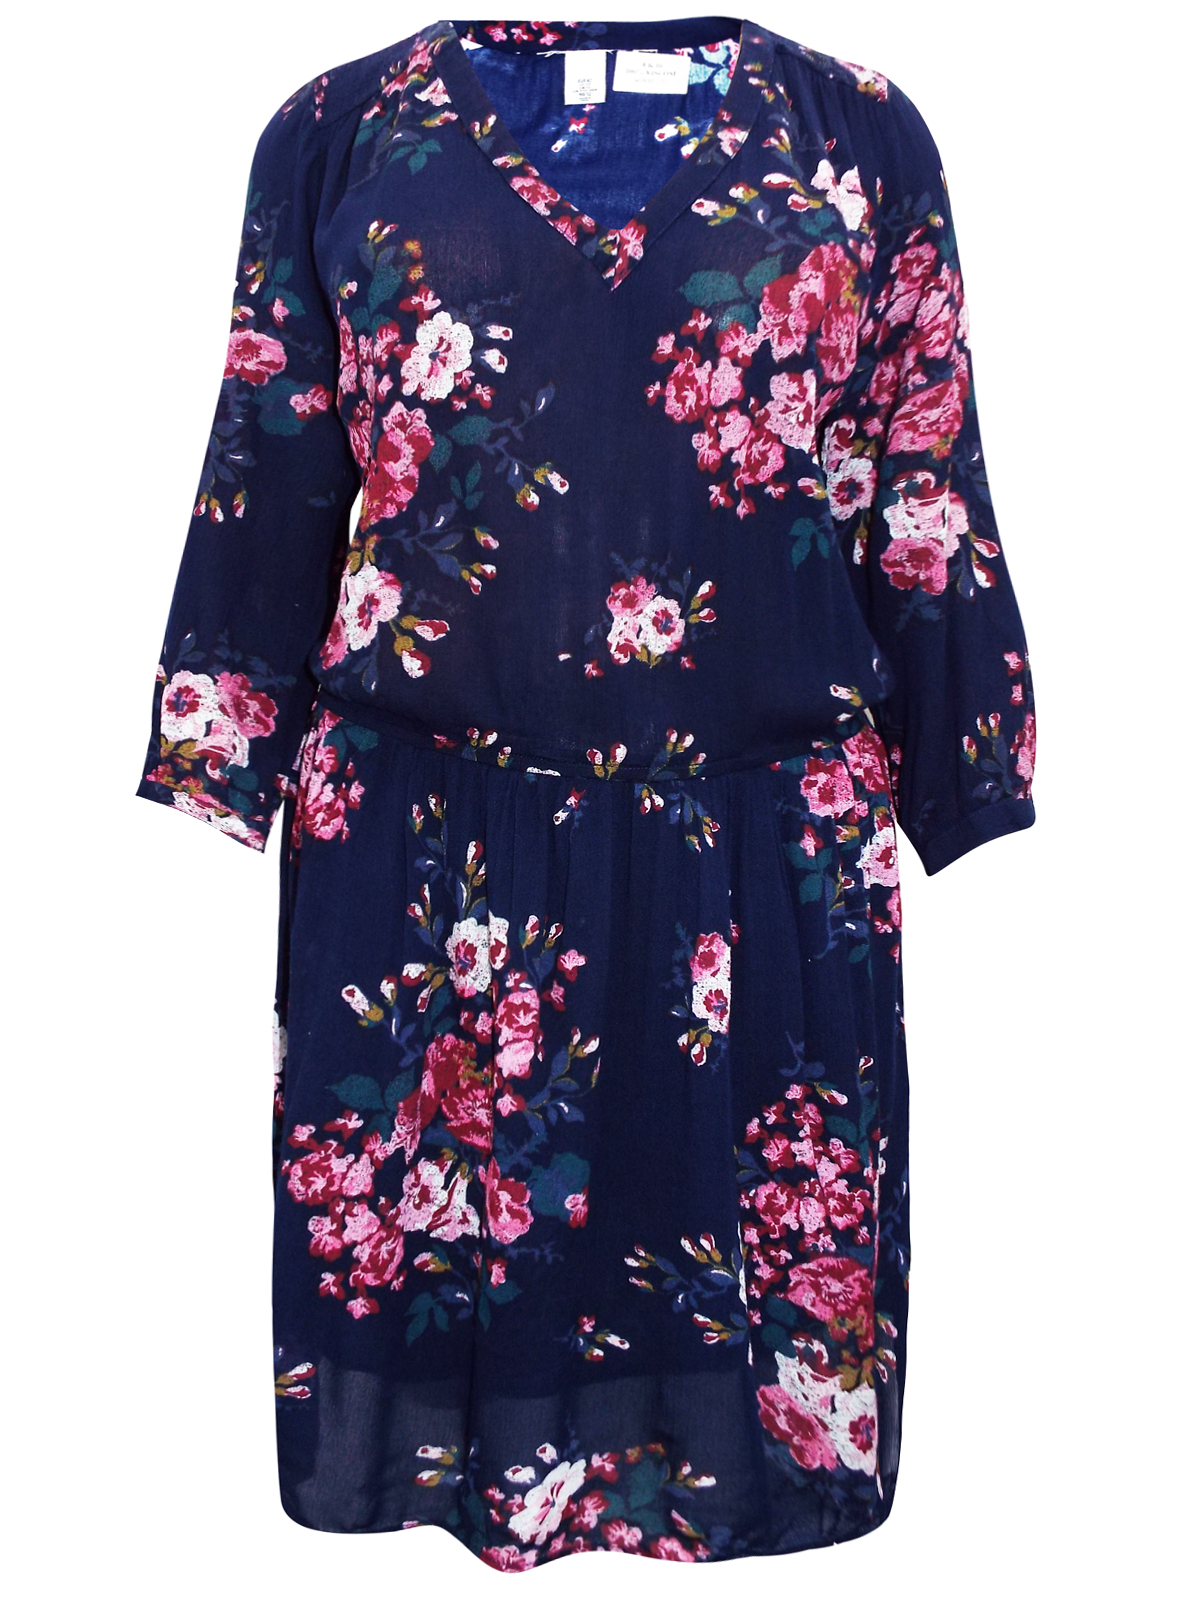 H&M NAVY Floral Printed Chiffon Dress - Size 16 to 20 (EU 42 to 46)